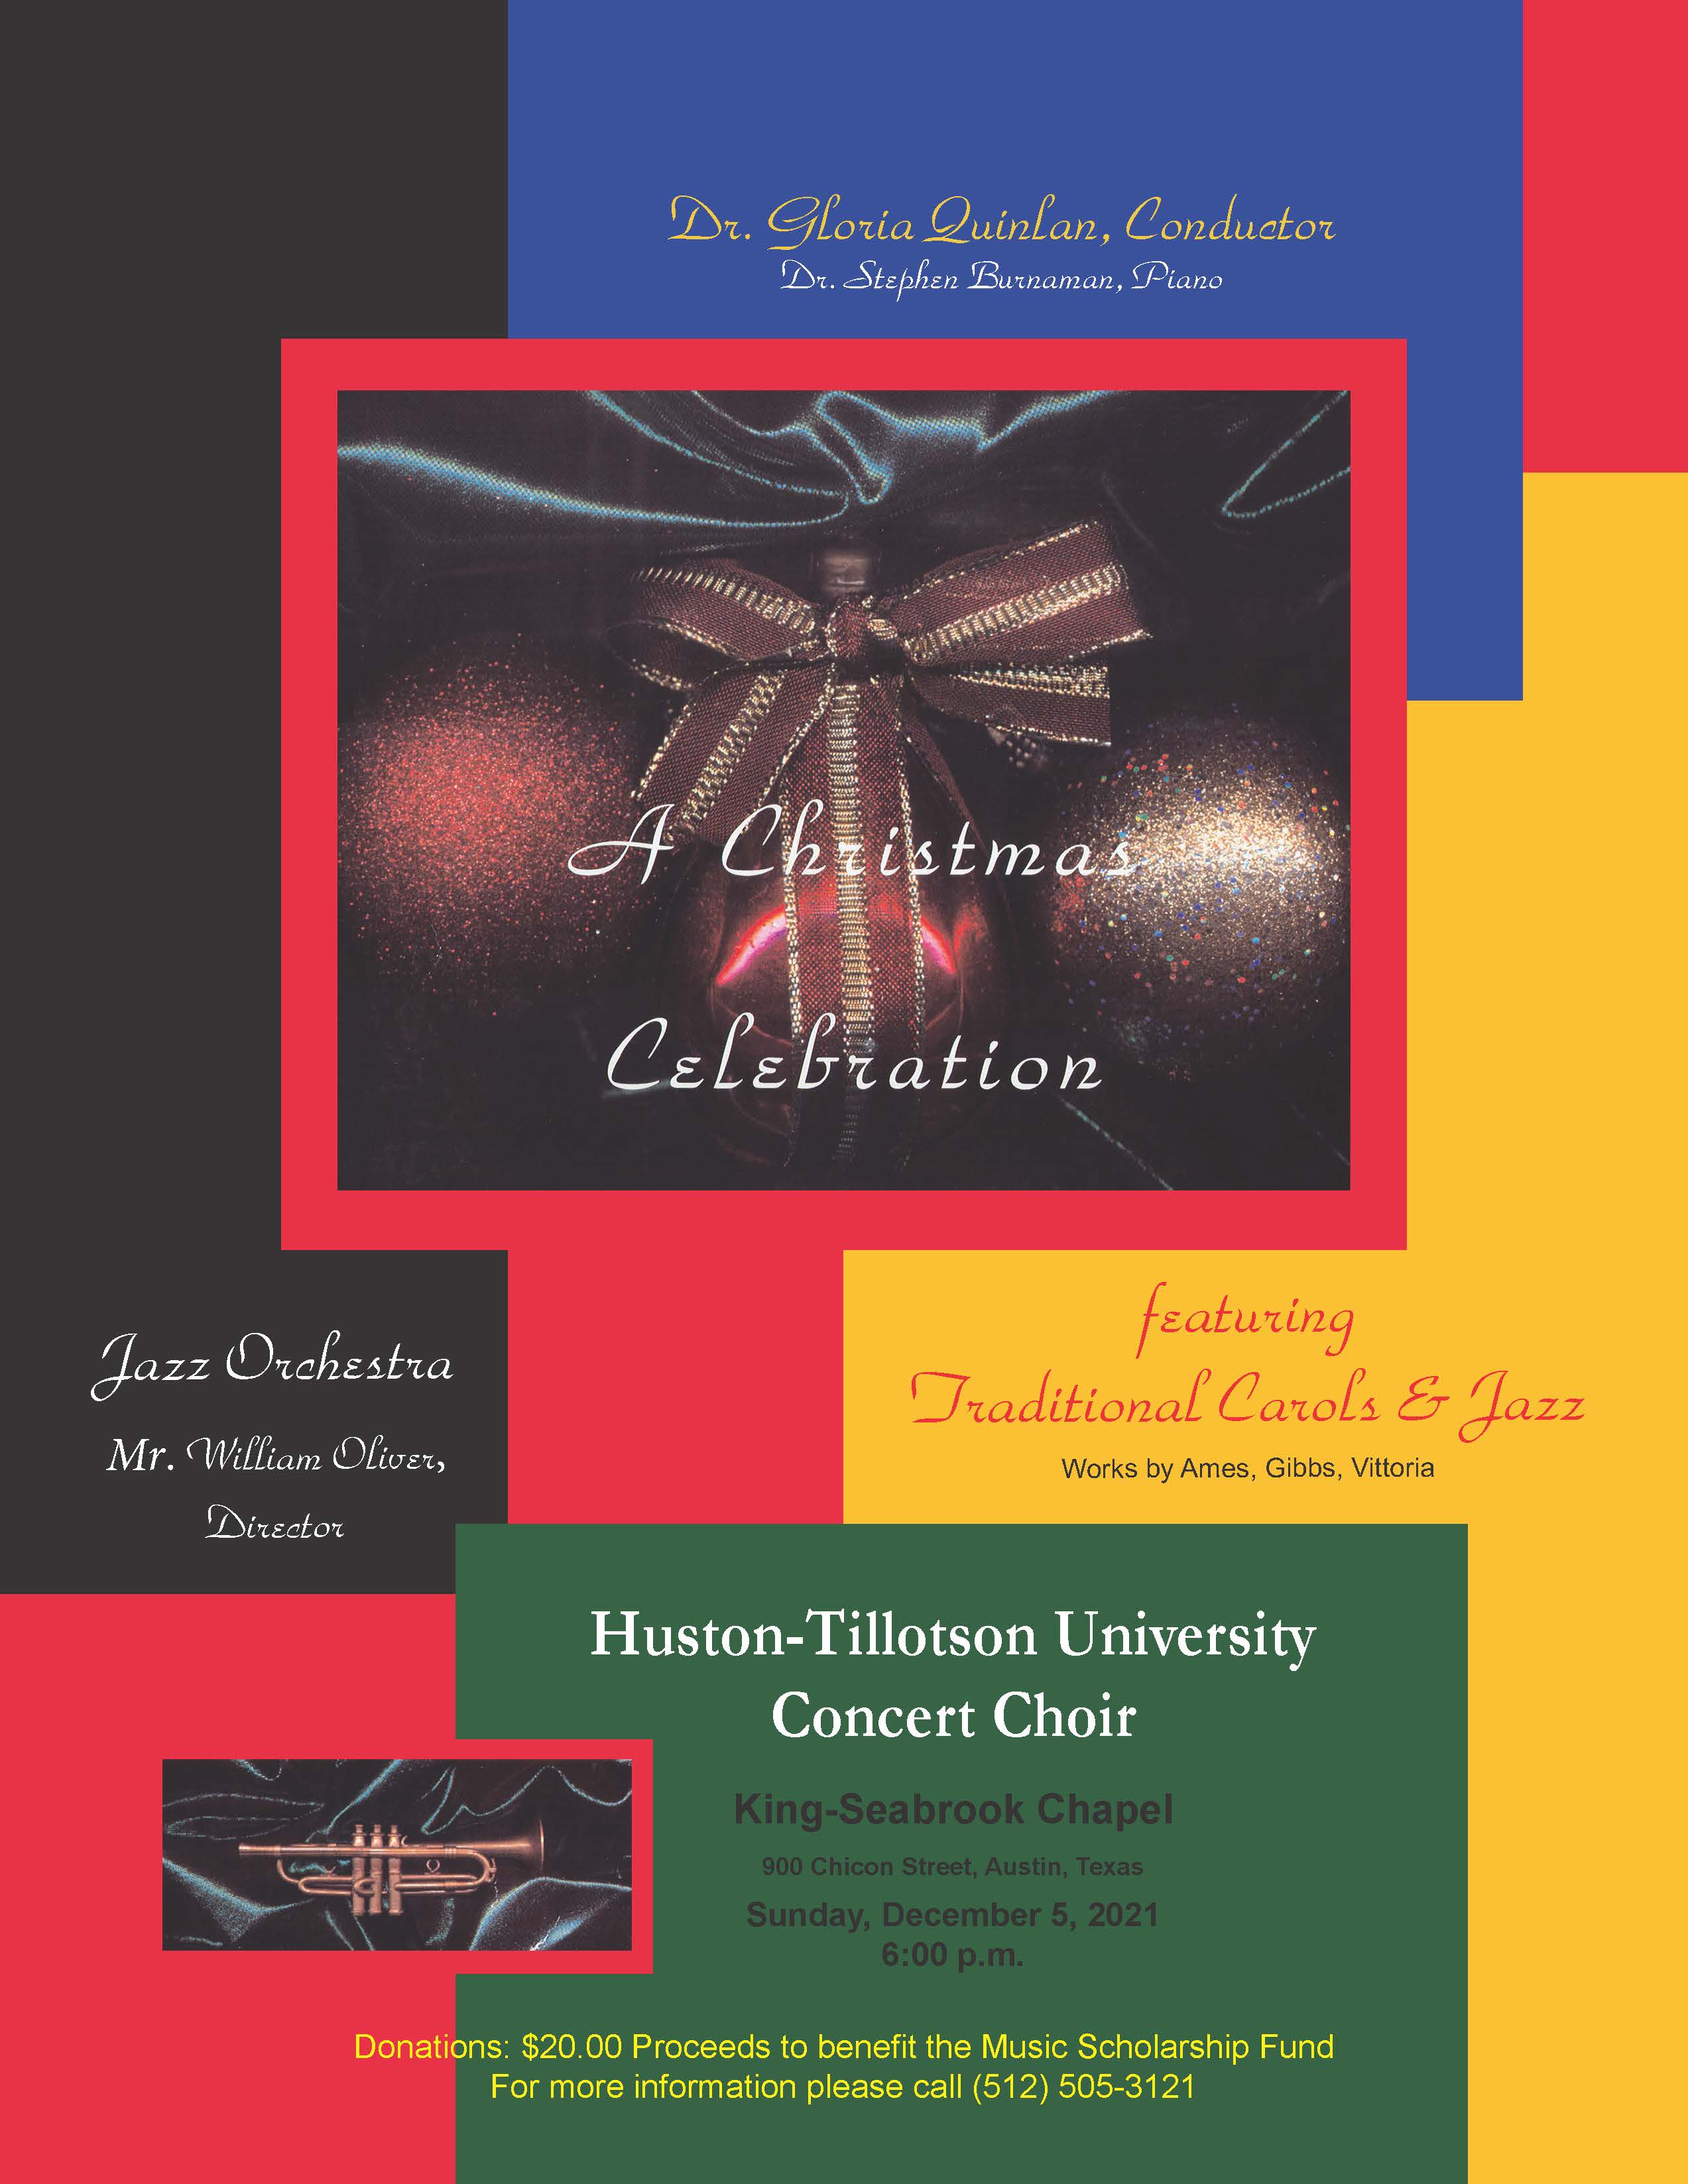 Huston-Tillotson University Concert